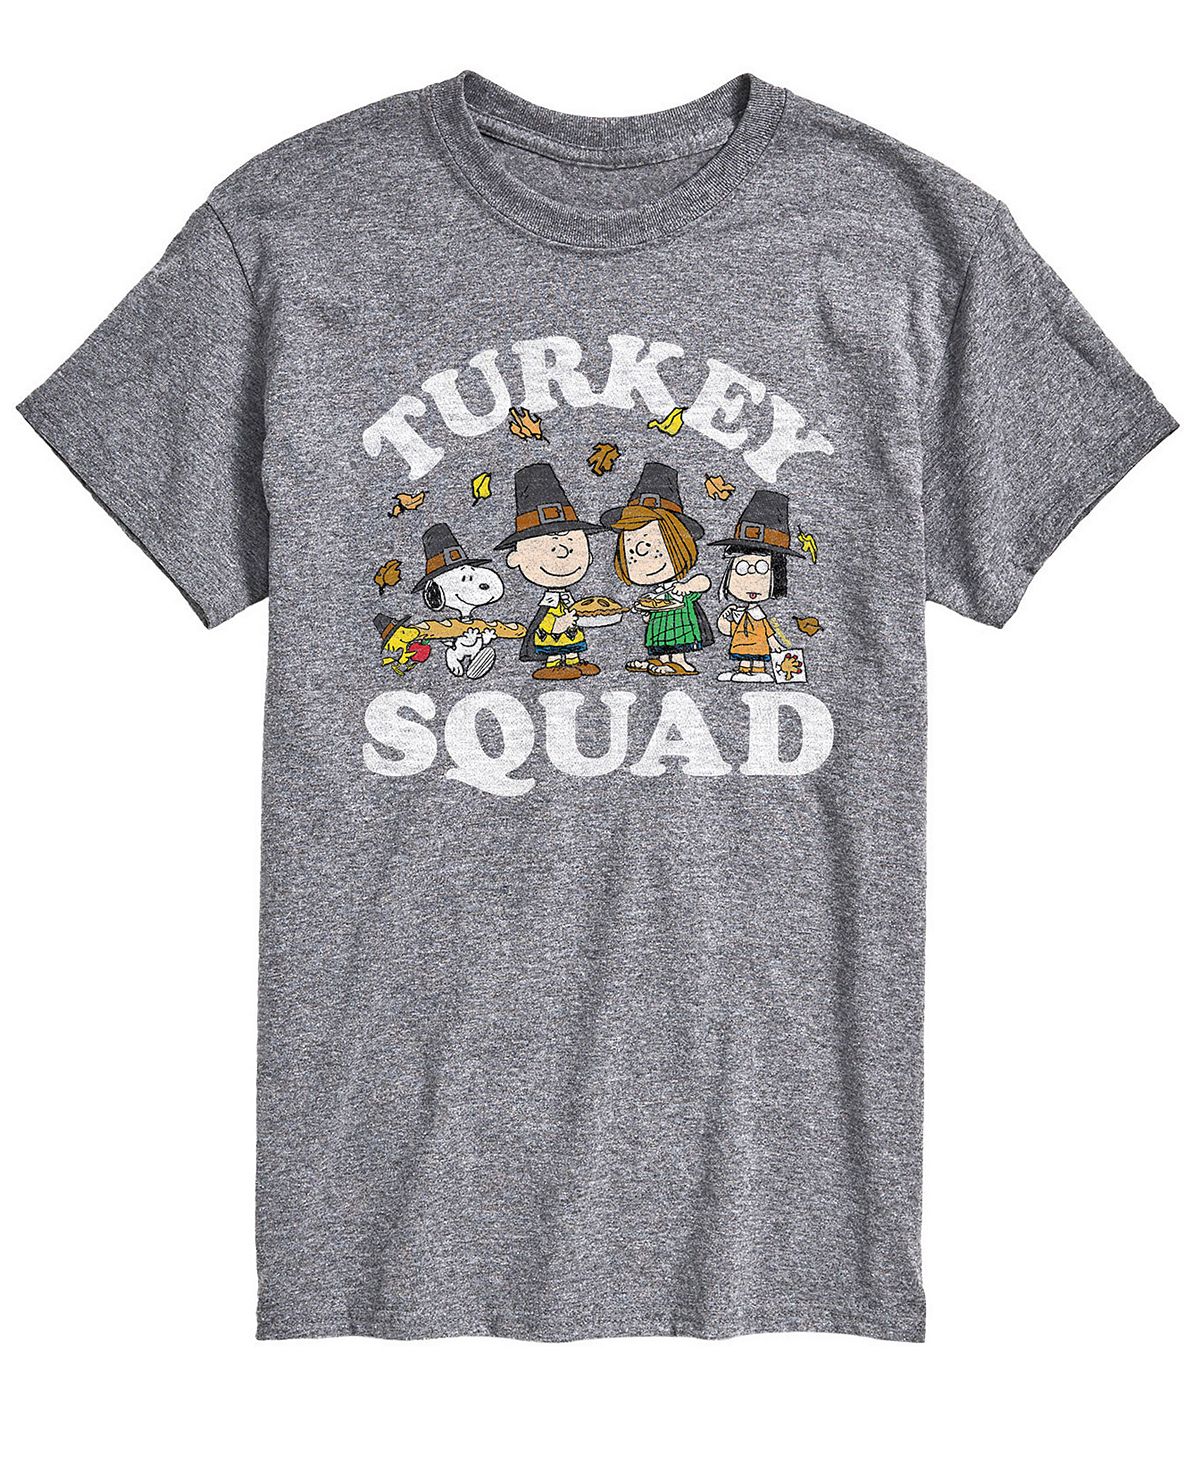 Мужская футболка с коротким рукавом Peanuts Turkey Squad AIRWAVES мужская гибридная футболка с коротким рукавом football turkey nap с повторяющимся рисунком airwaves серый